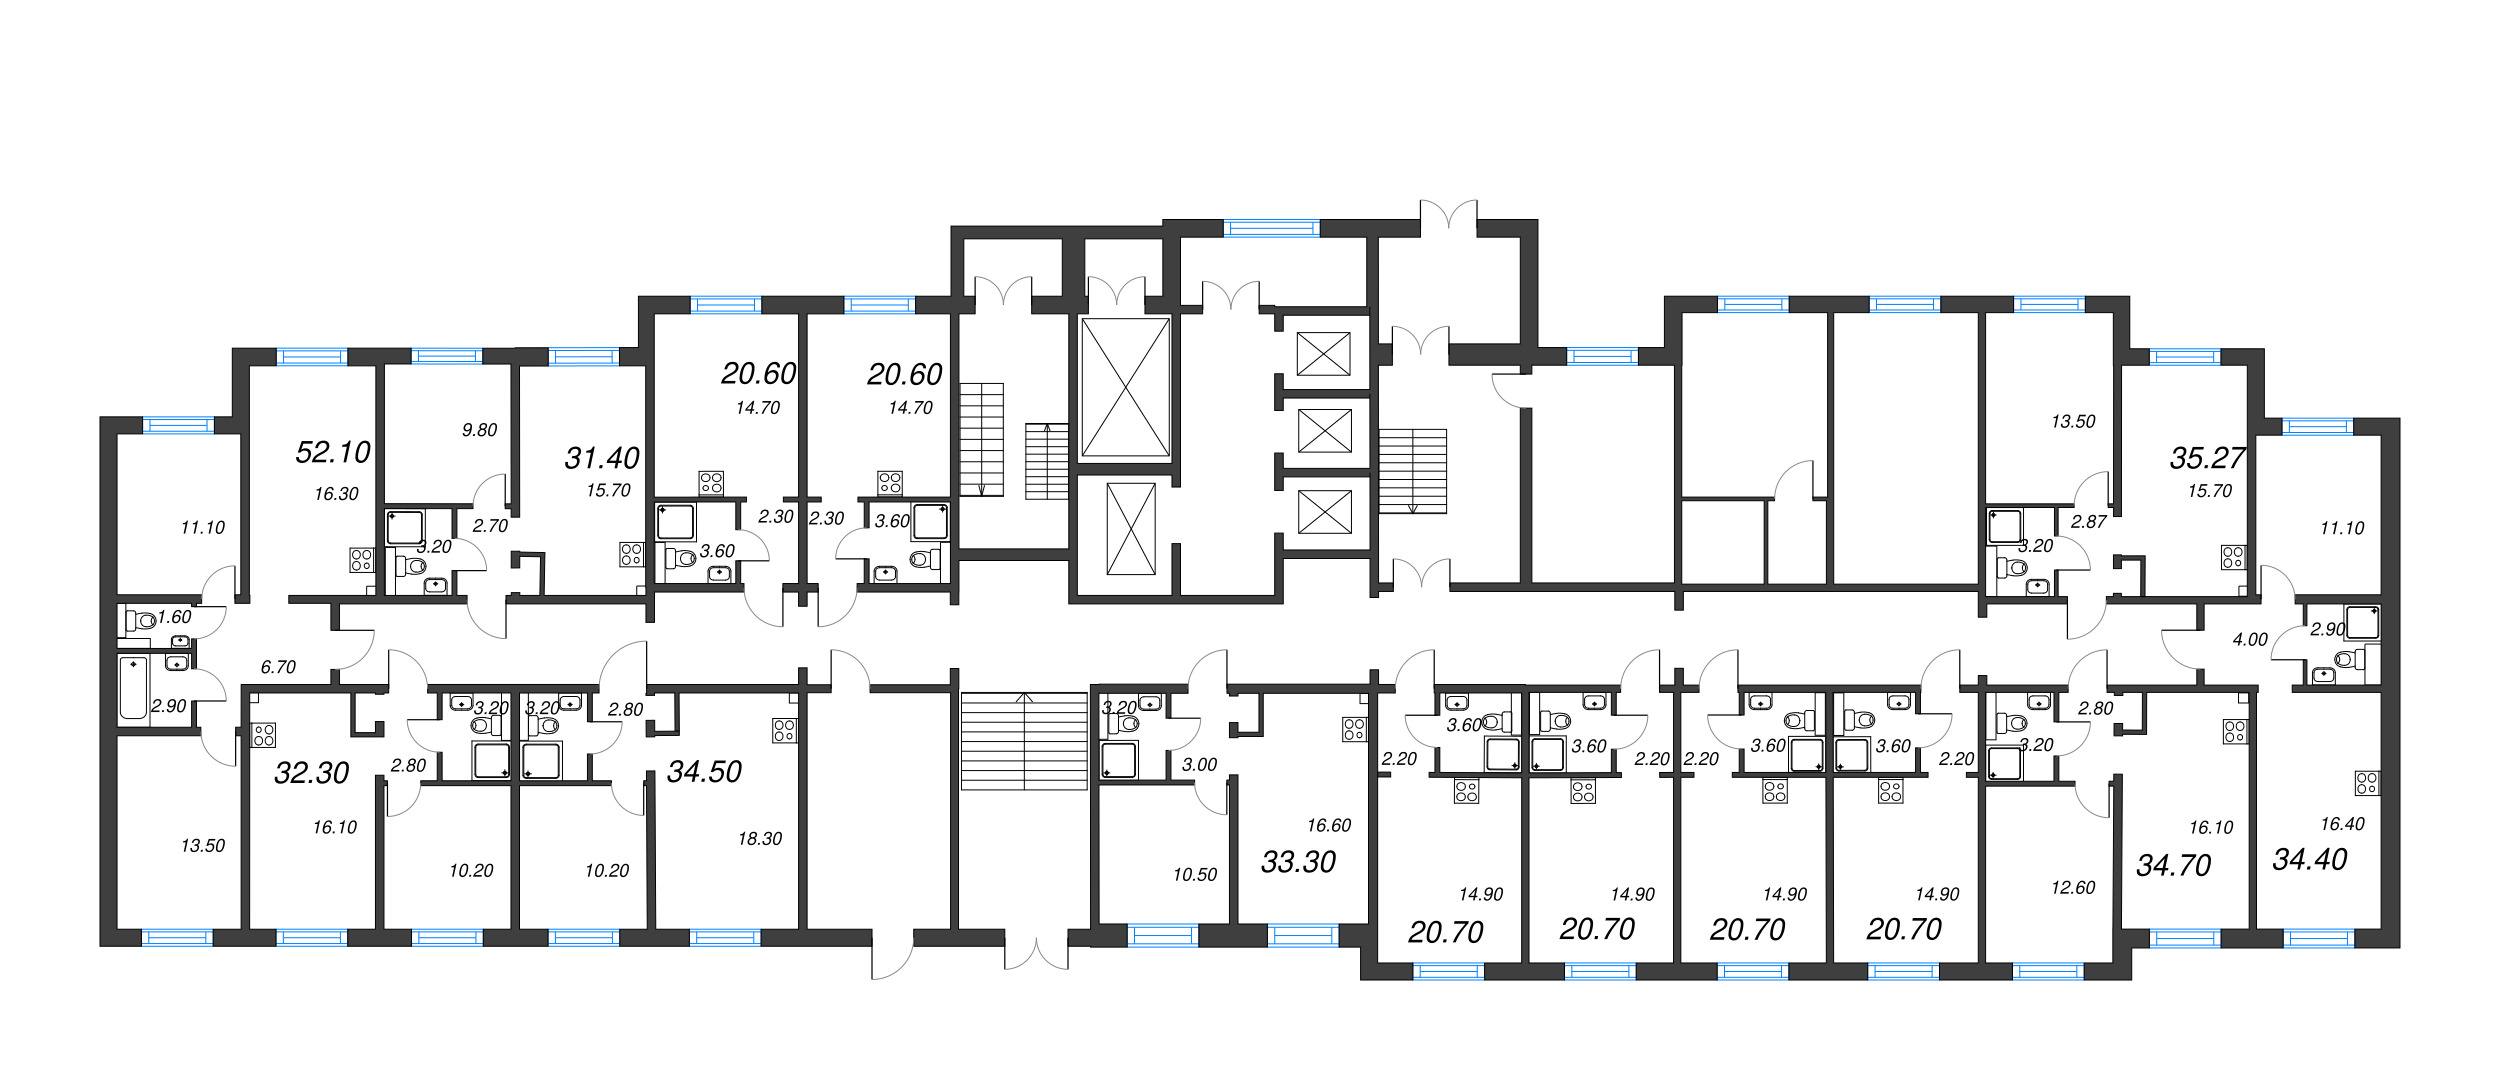 3-комнатная (Евро) квартира, 52.1 м² - планировка этажа